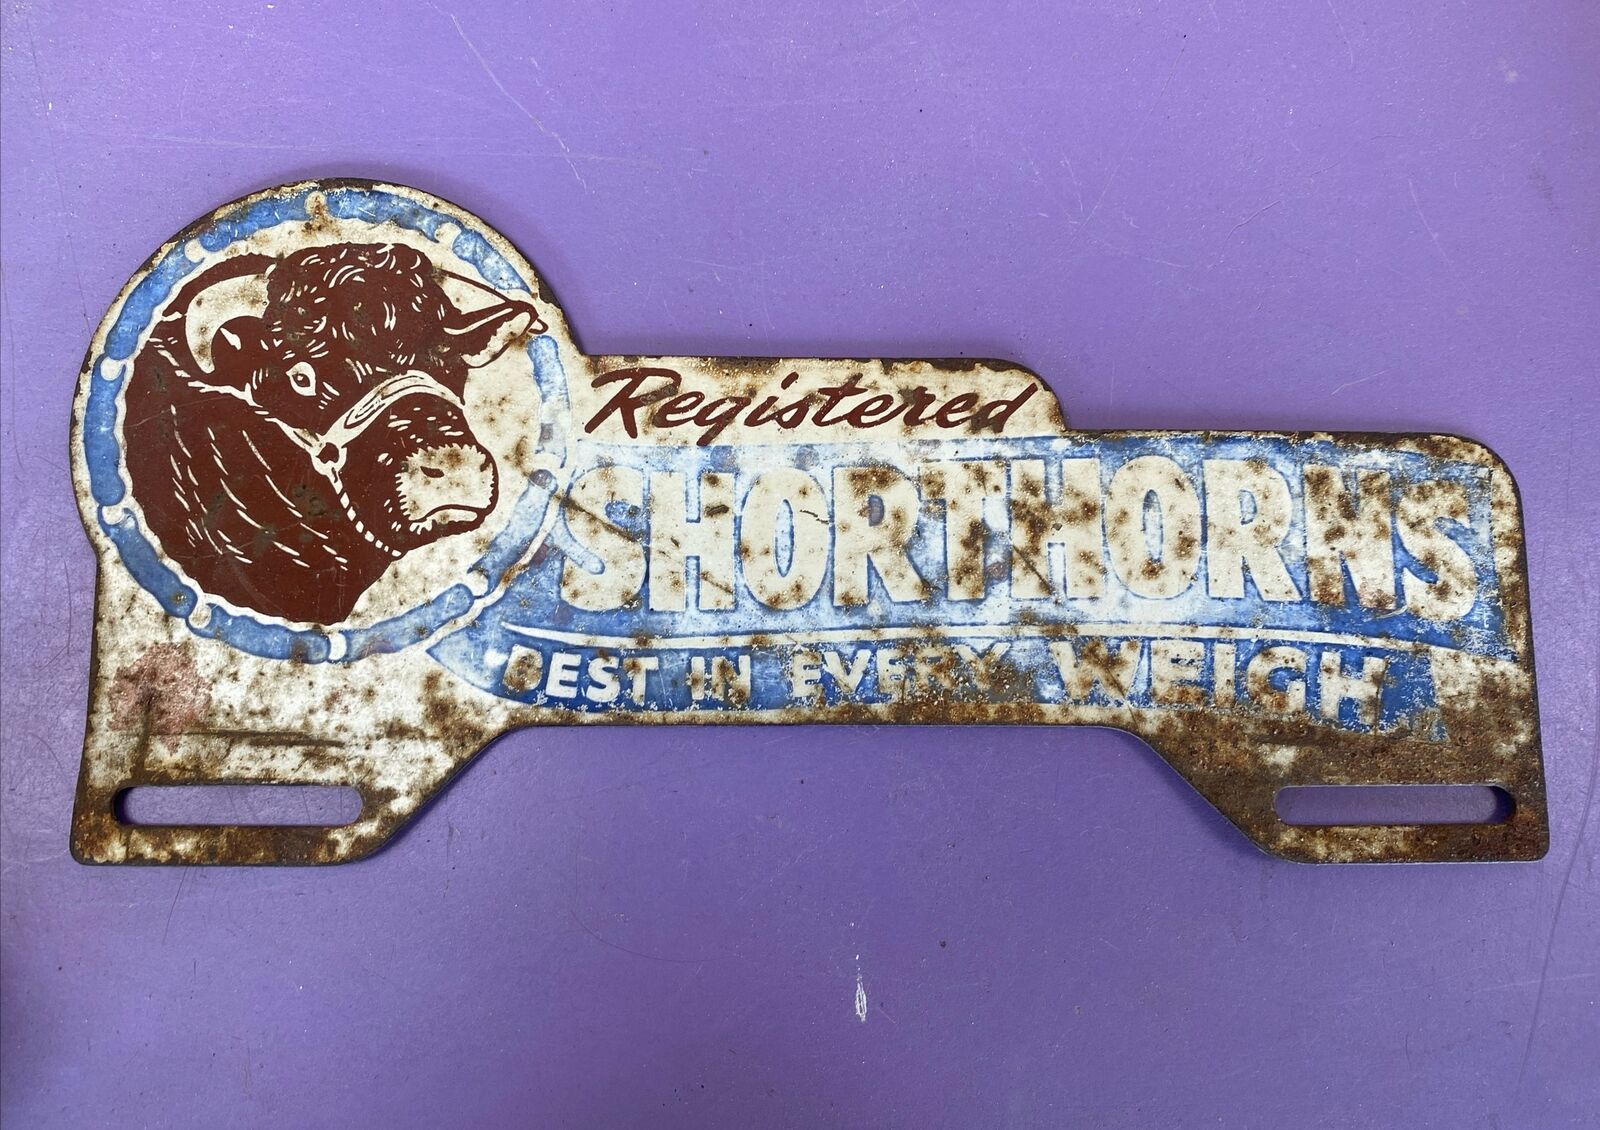 Vintage Original RARE License Plate Topper. Registered Shorthorns Best In Weigh